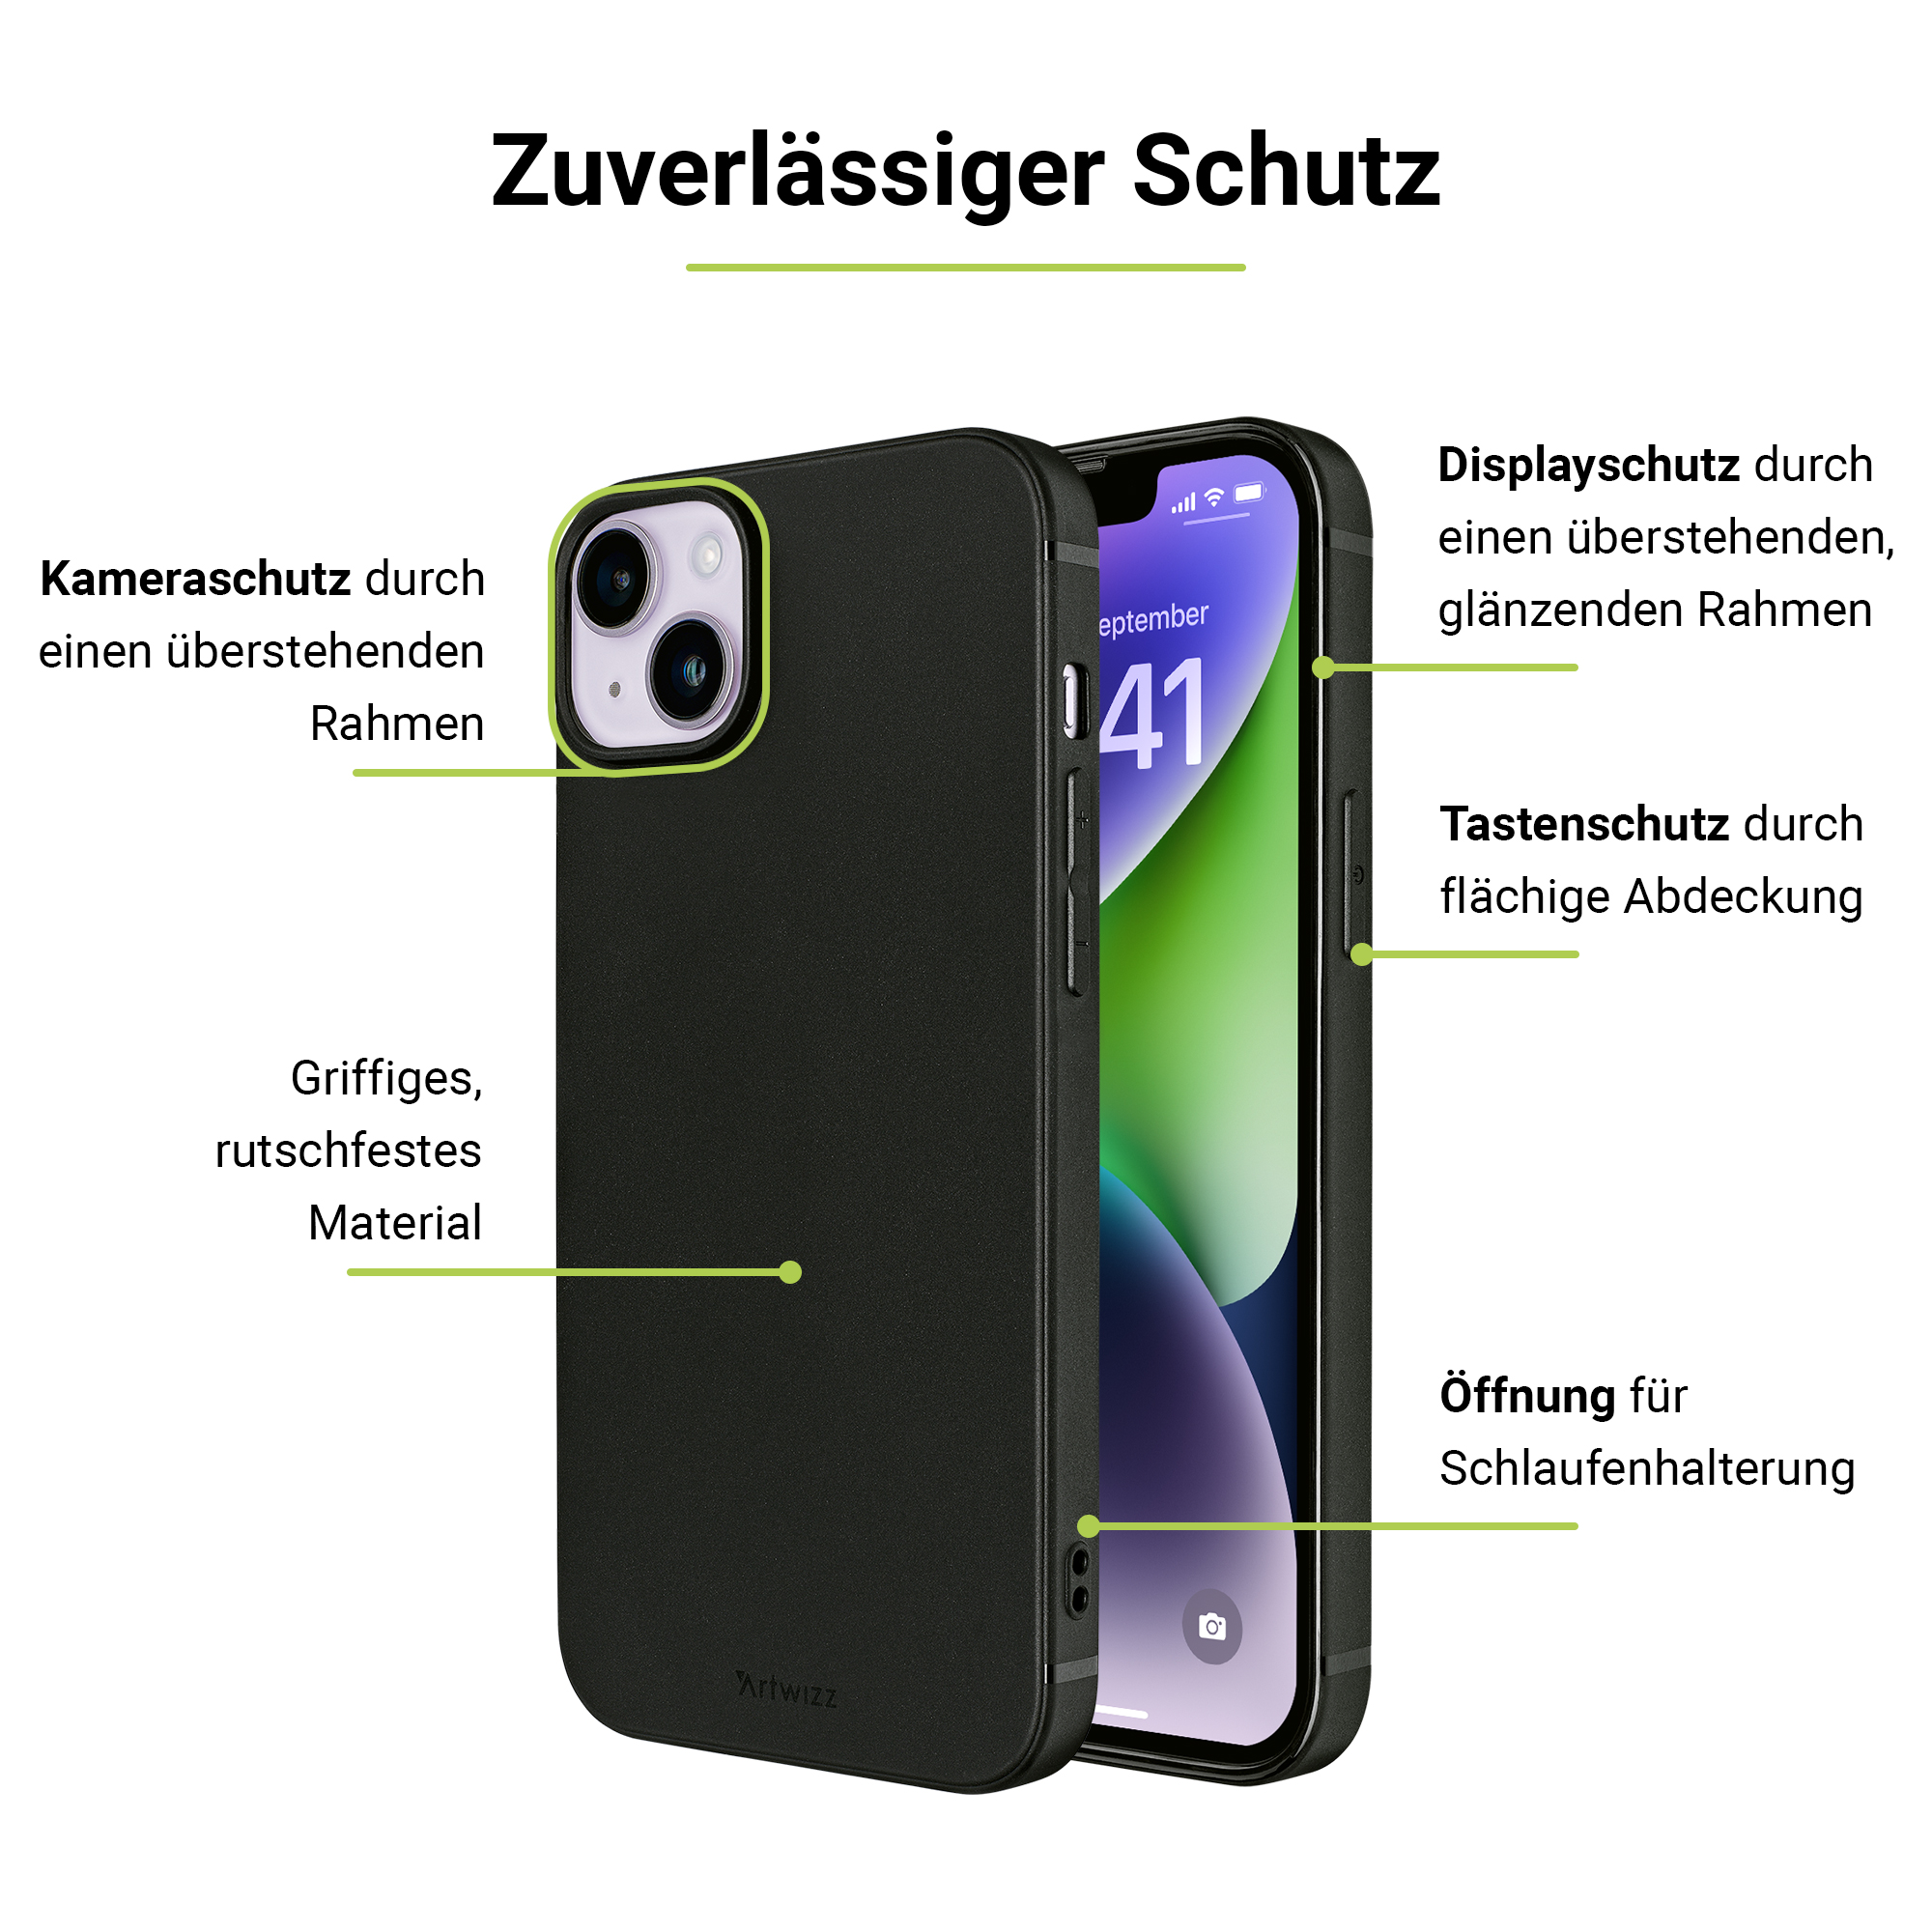 Case, Backcover, Schwarz TPU 14 Plus, iPhone Apple, ARTWIZZ